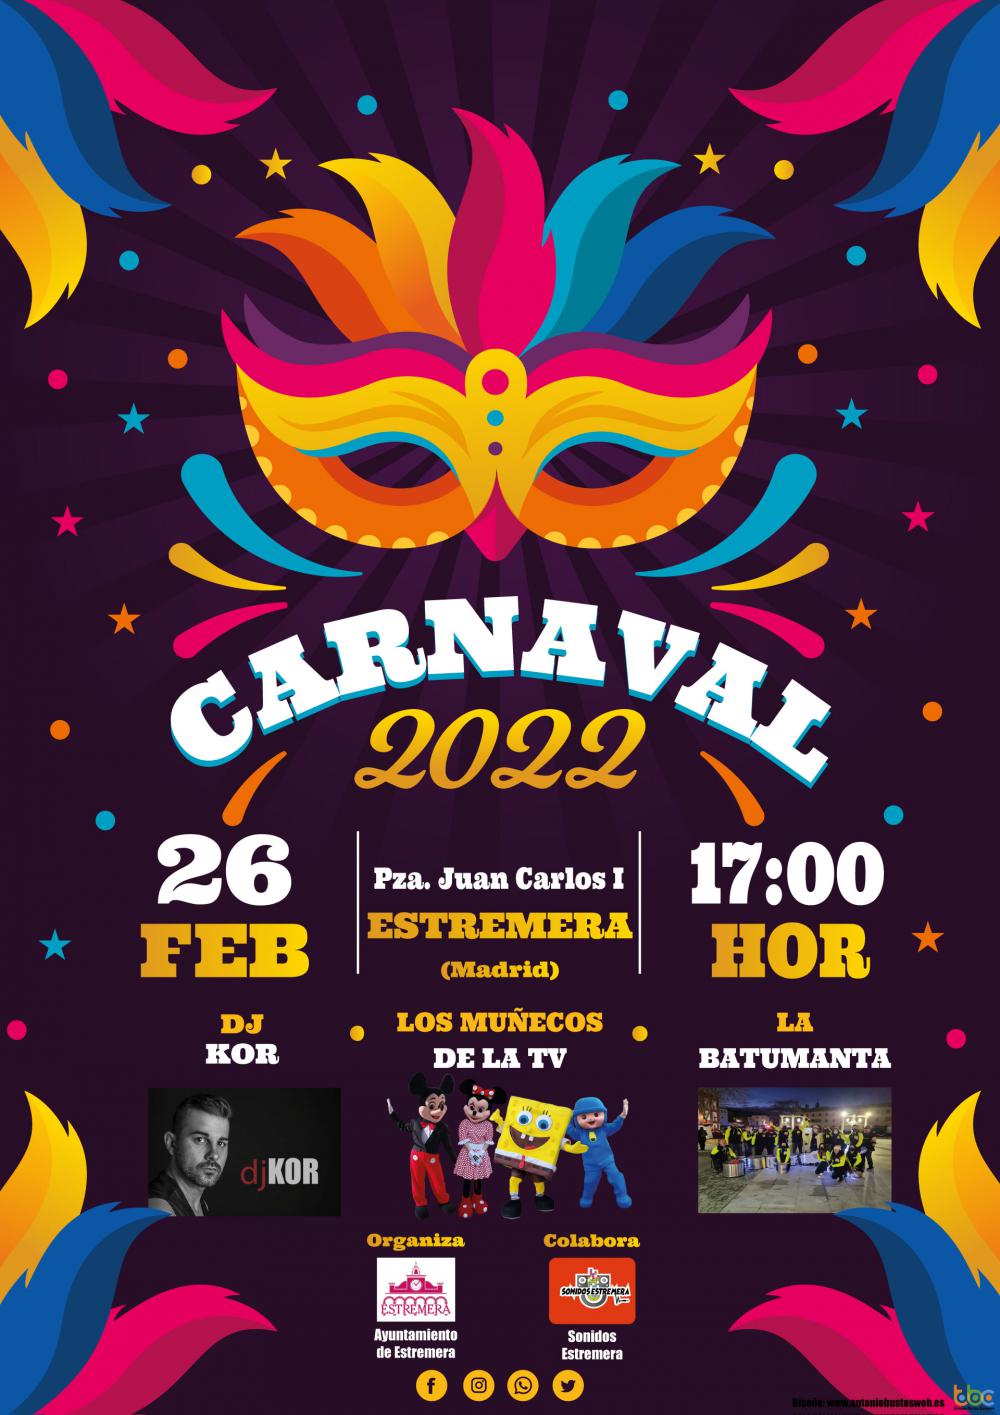 Carnaval Extremera 2022